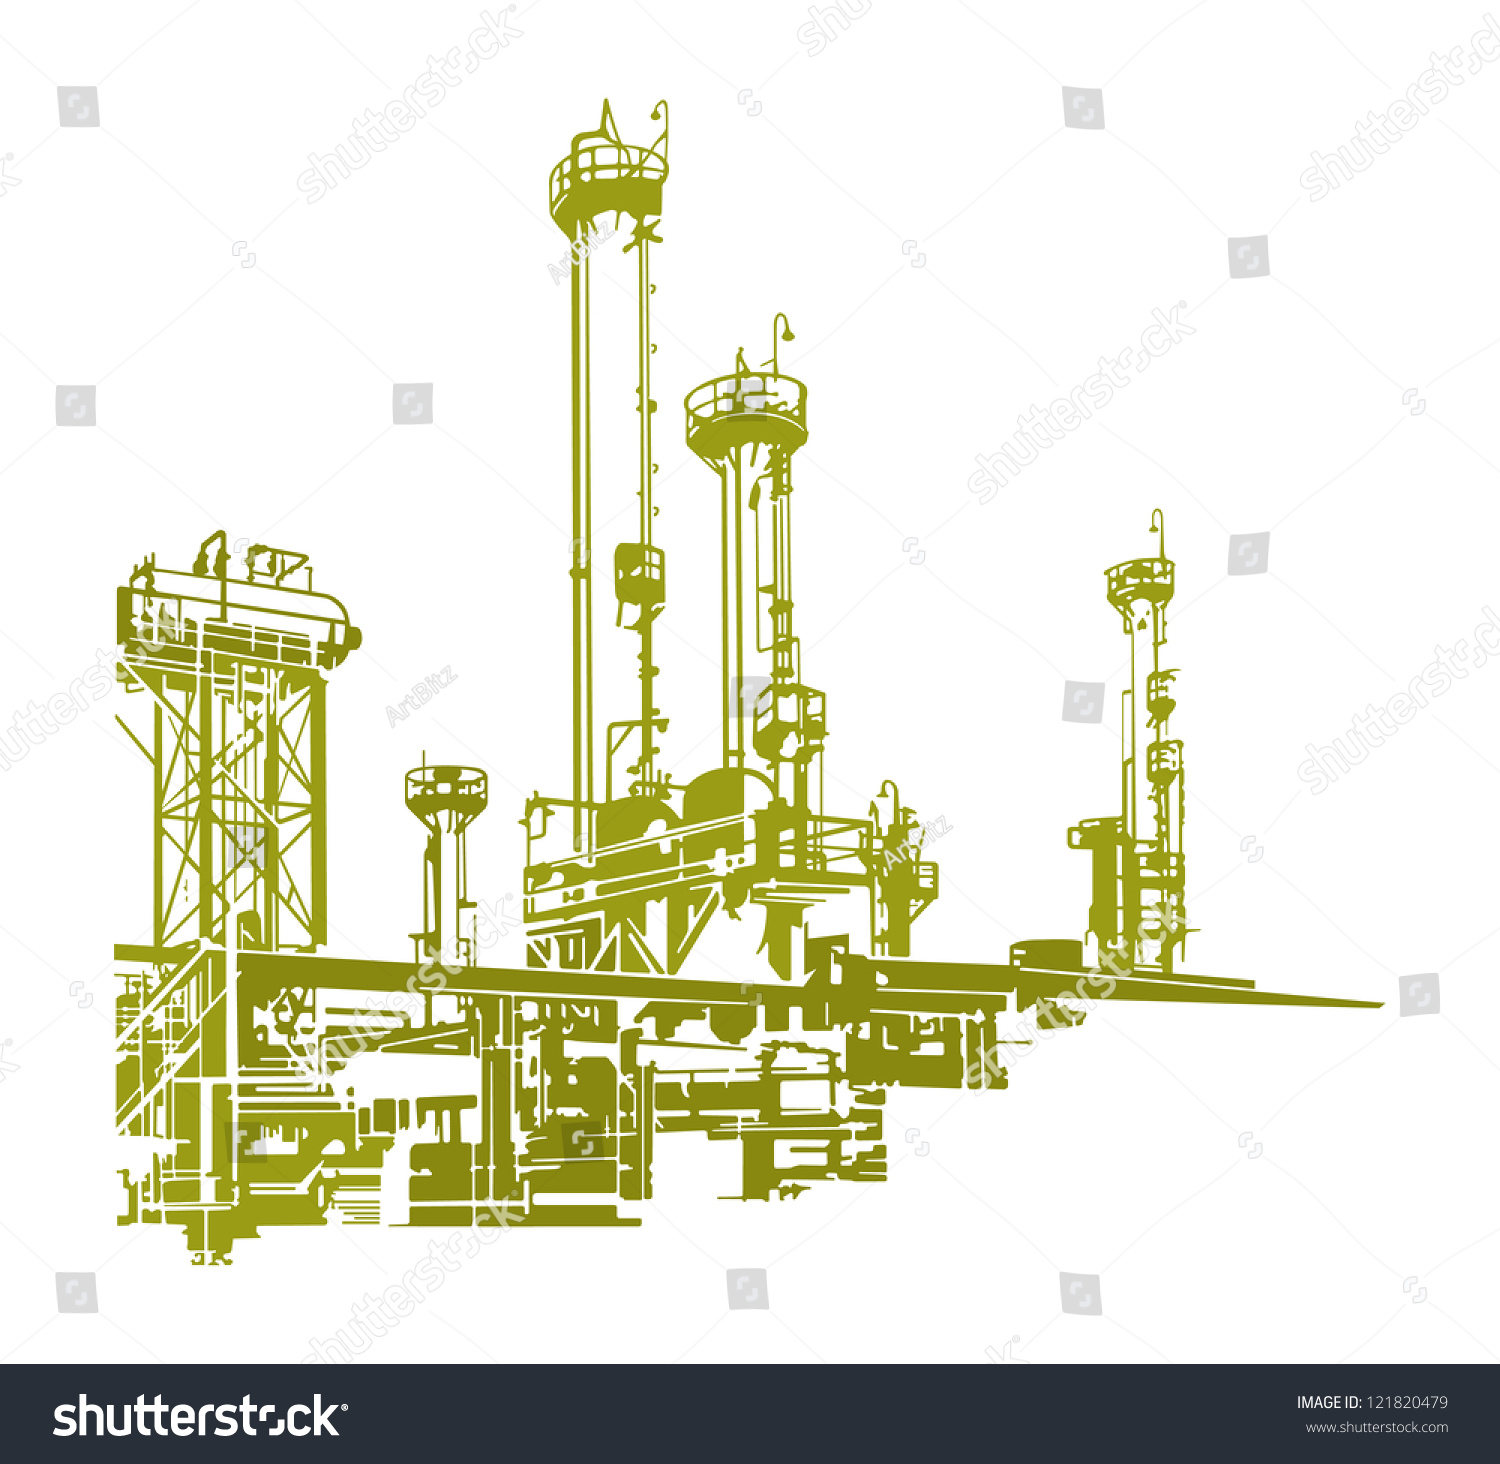 clipart oil refinery - photo #22